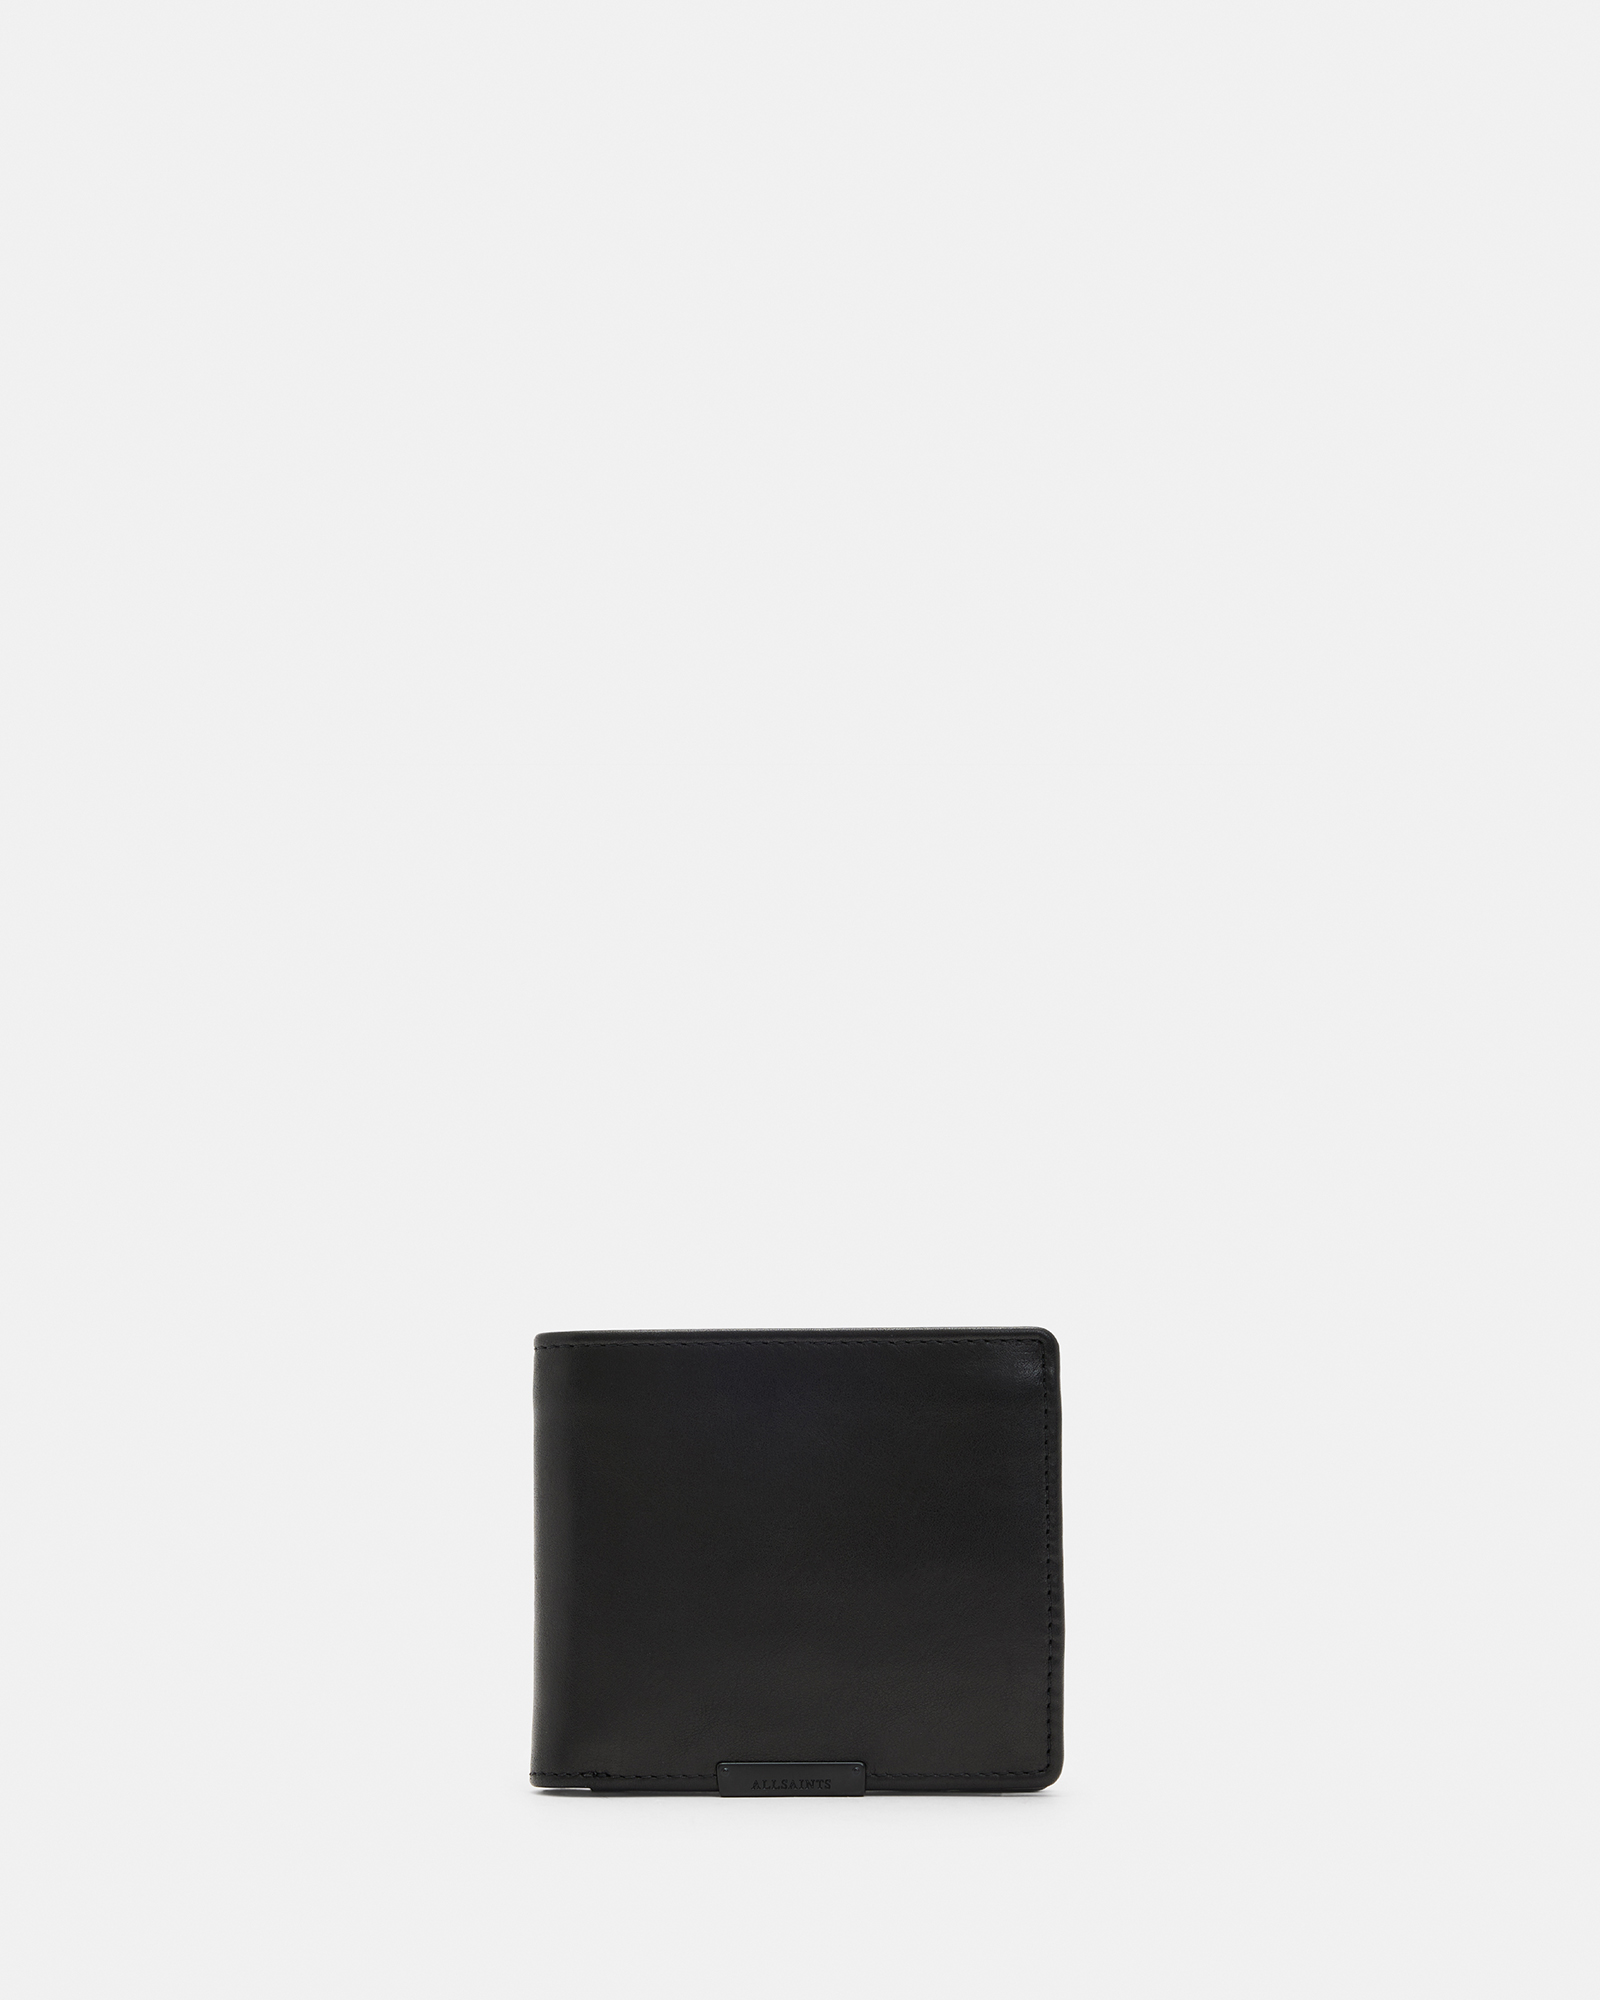 AllSaints Blyth Bi-Fold Leather Wallet,, Black, Size: One Size